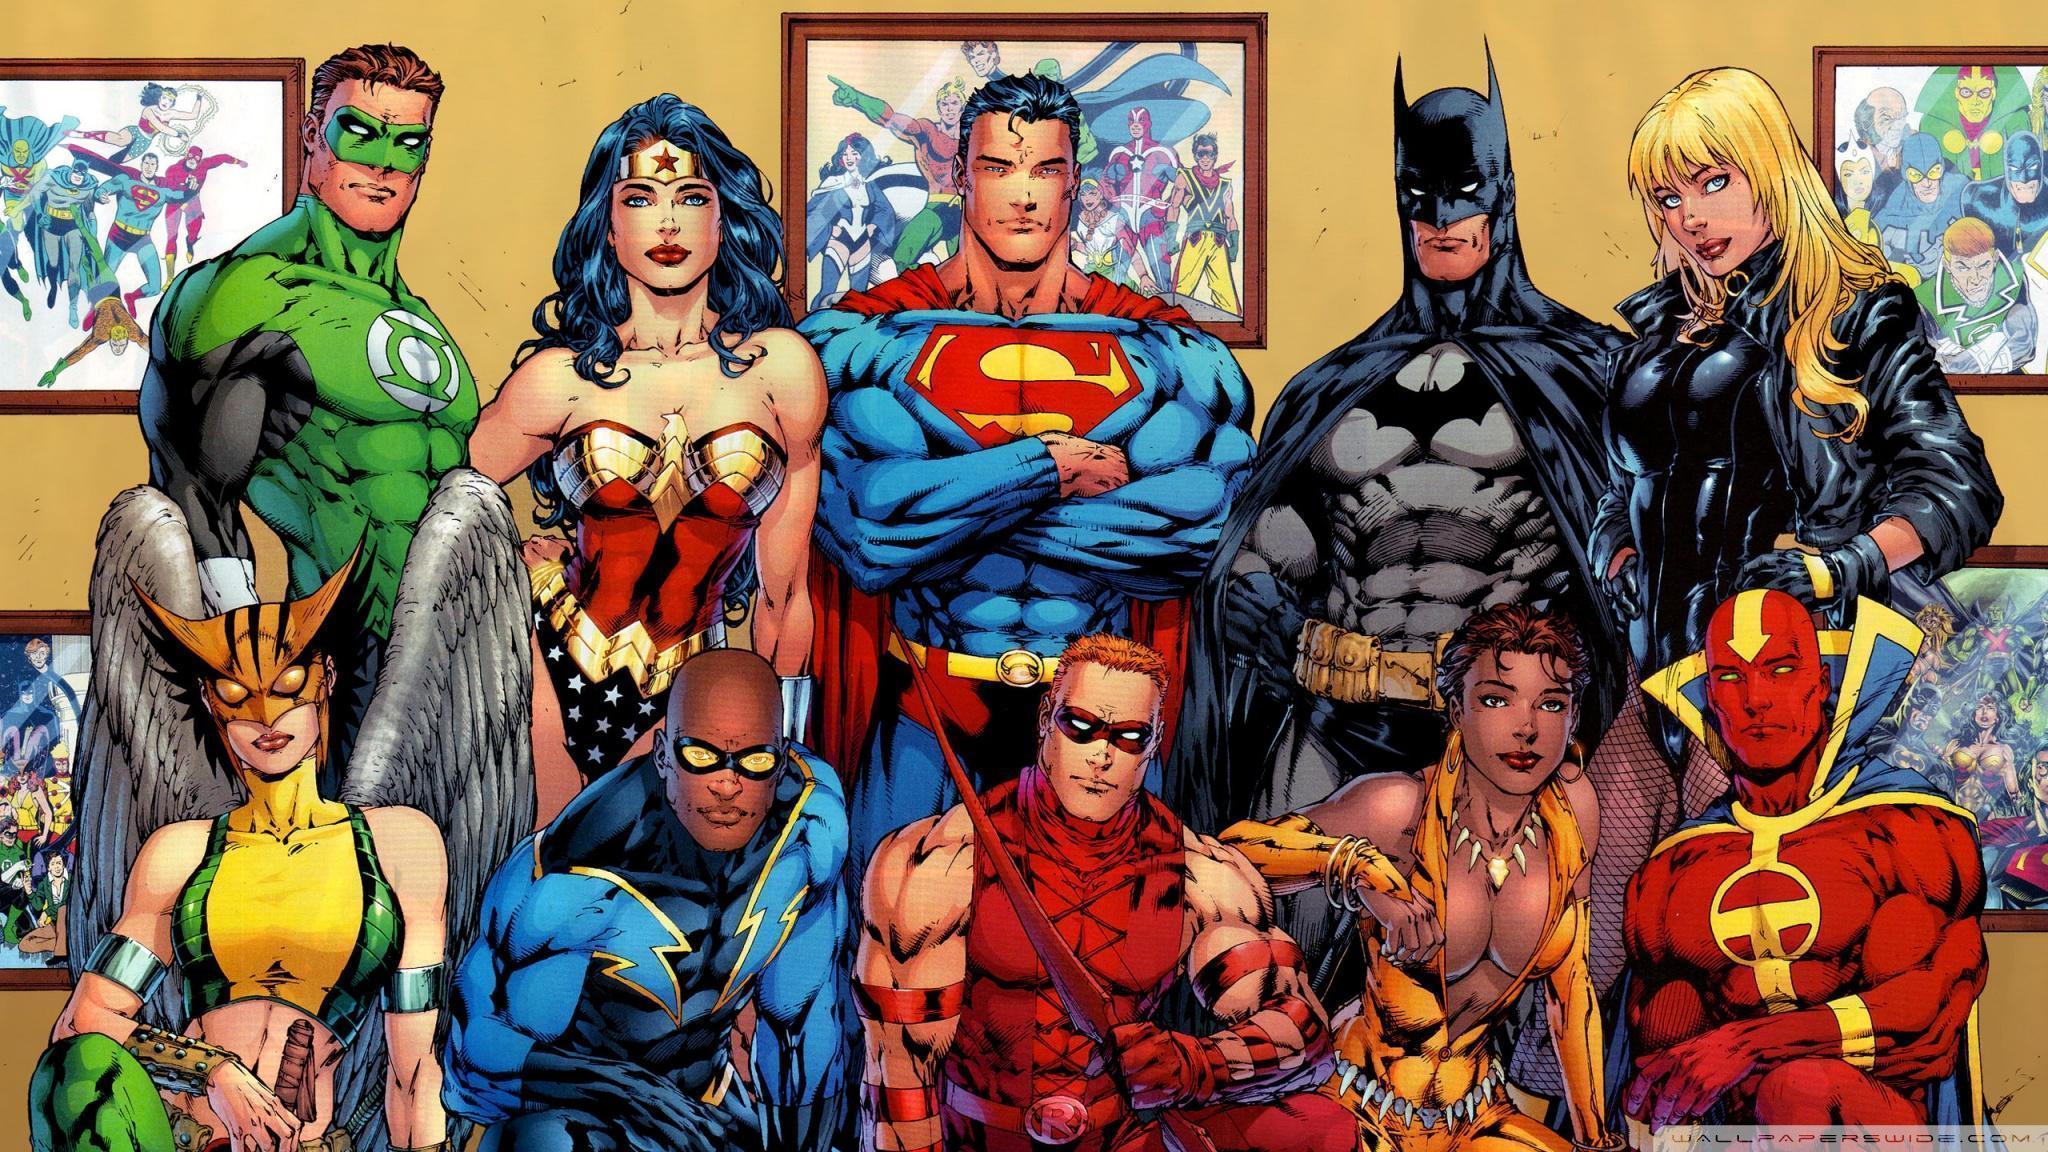 DC Superhero Wallpapers - Top Free DC Superhero Backgrounds ...